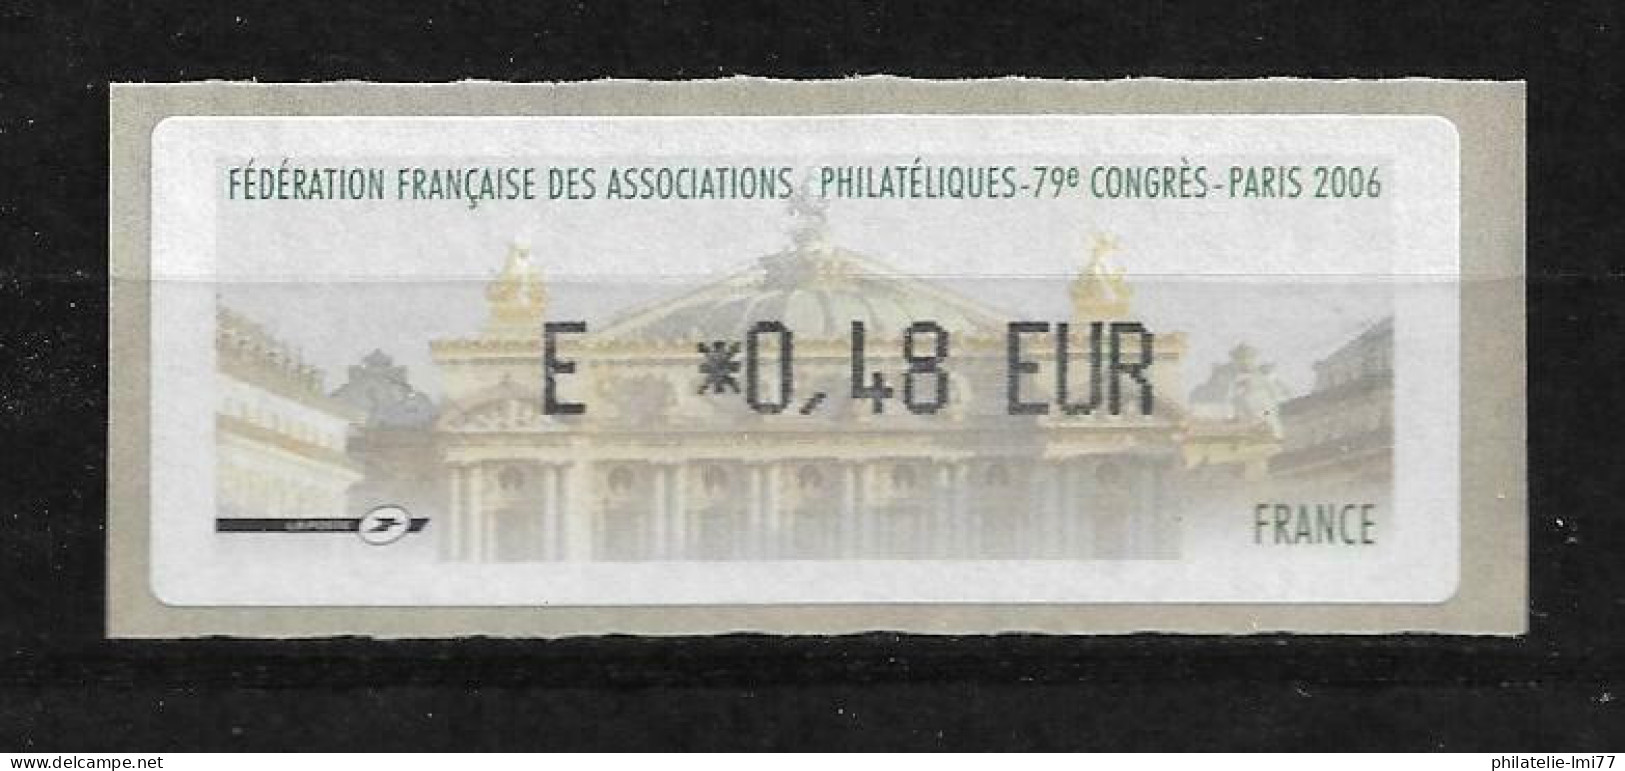 LISA 0,48 € - FFAP - 79e Congrès - Paris 2006 - 1999-2009 Illustrated Franking Labels